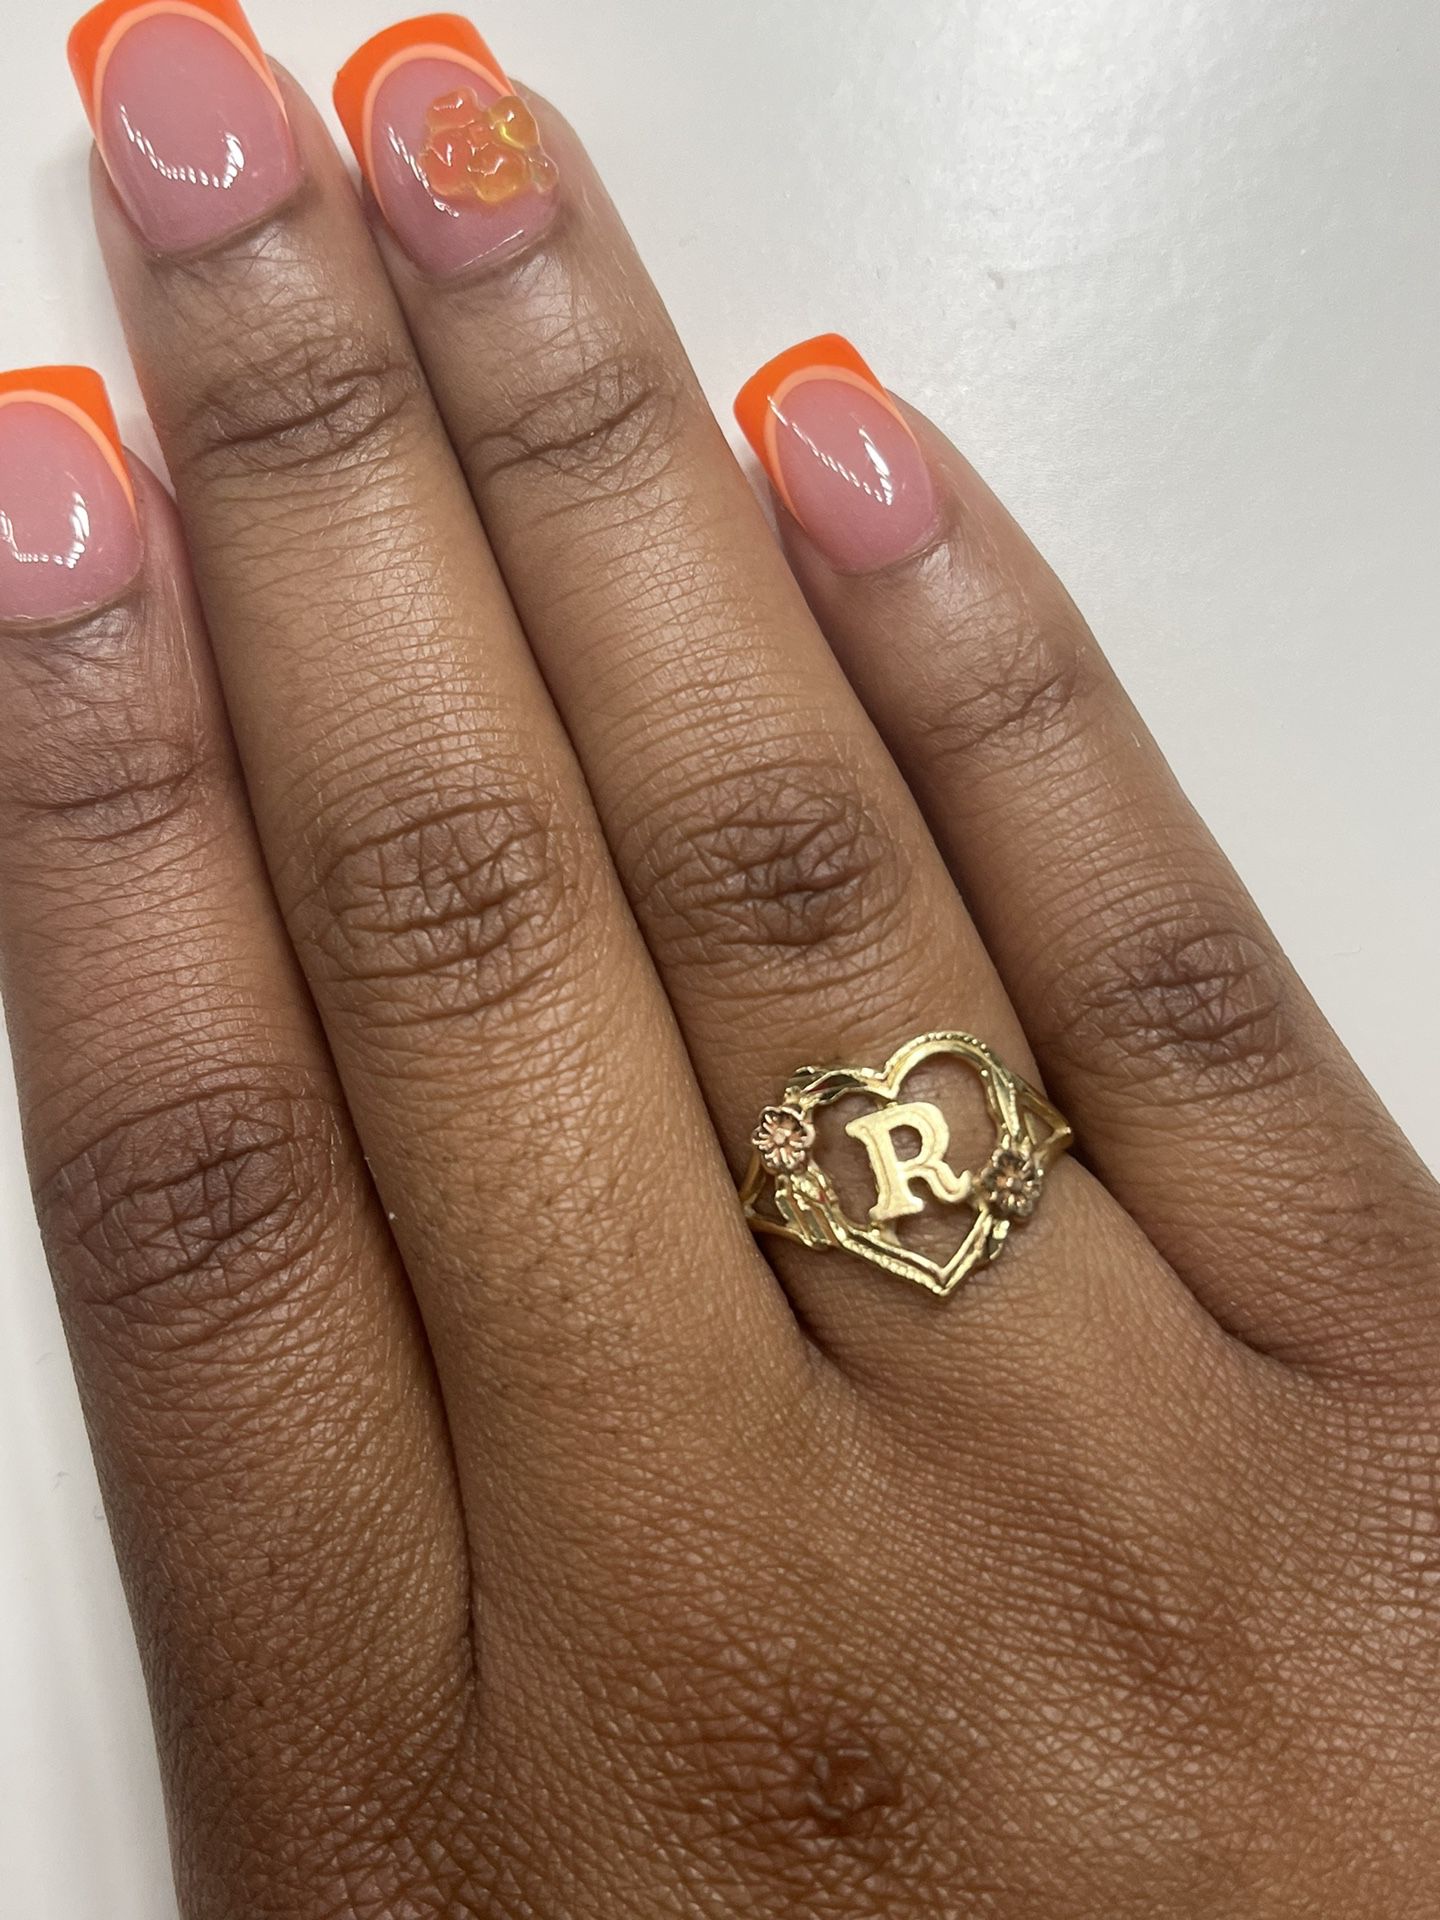 14K Gold ring “R”